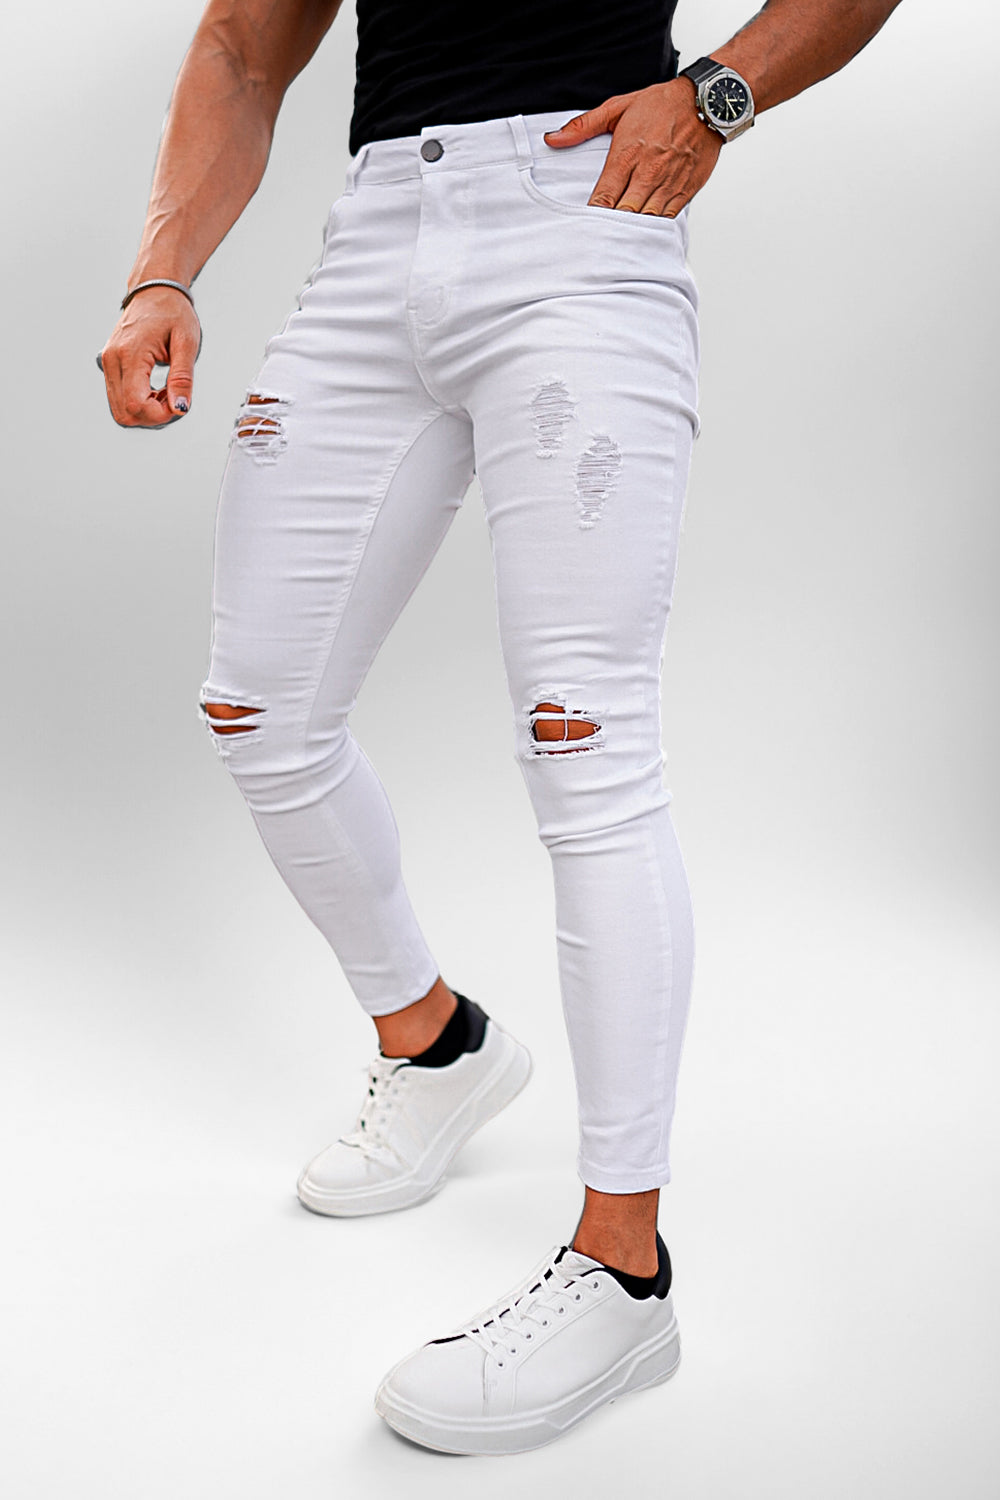  men's white skinny jeans - ripped